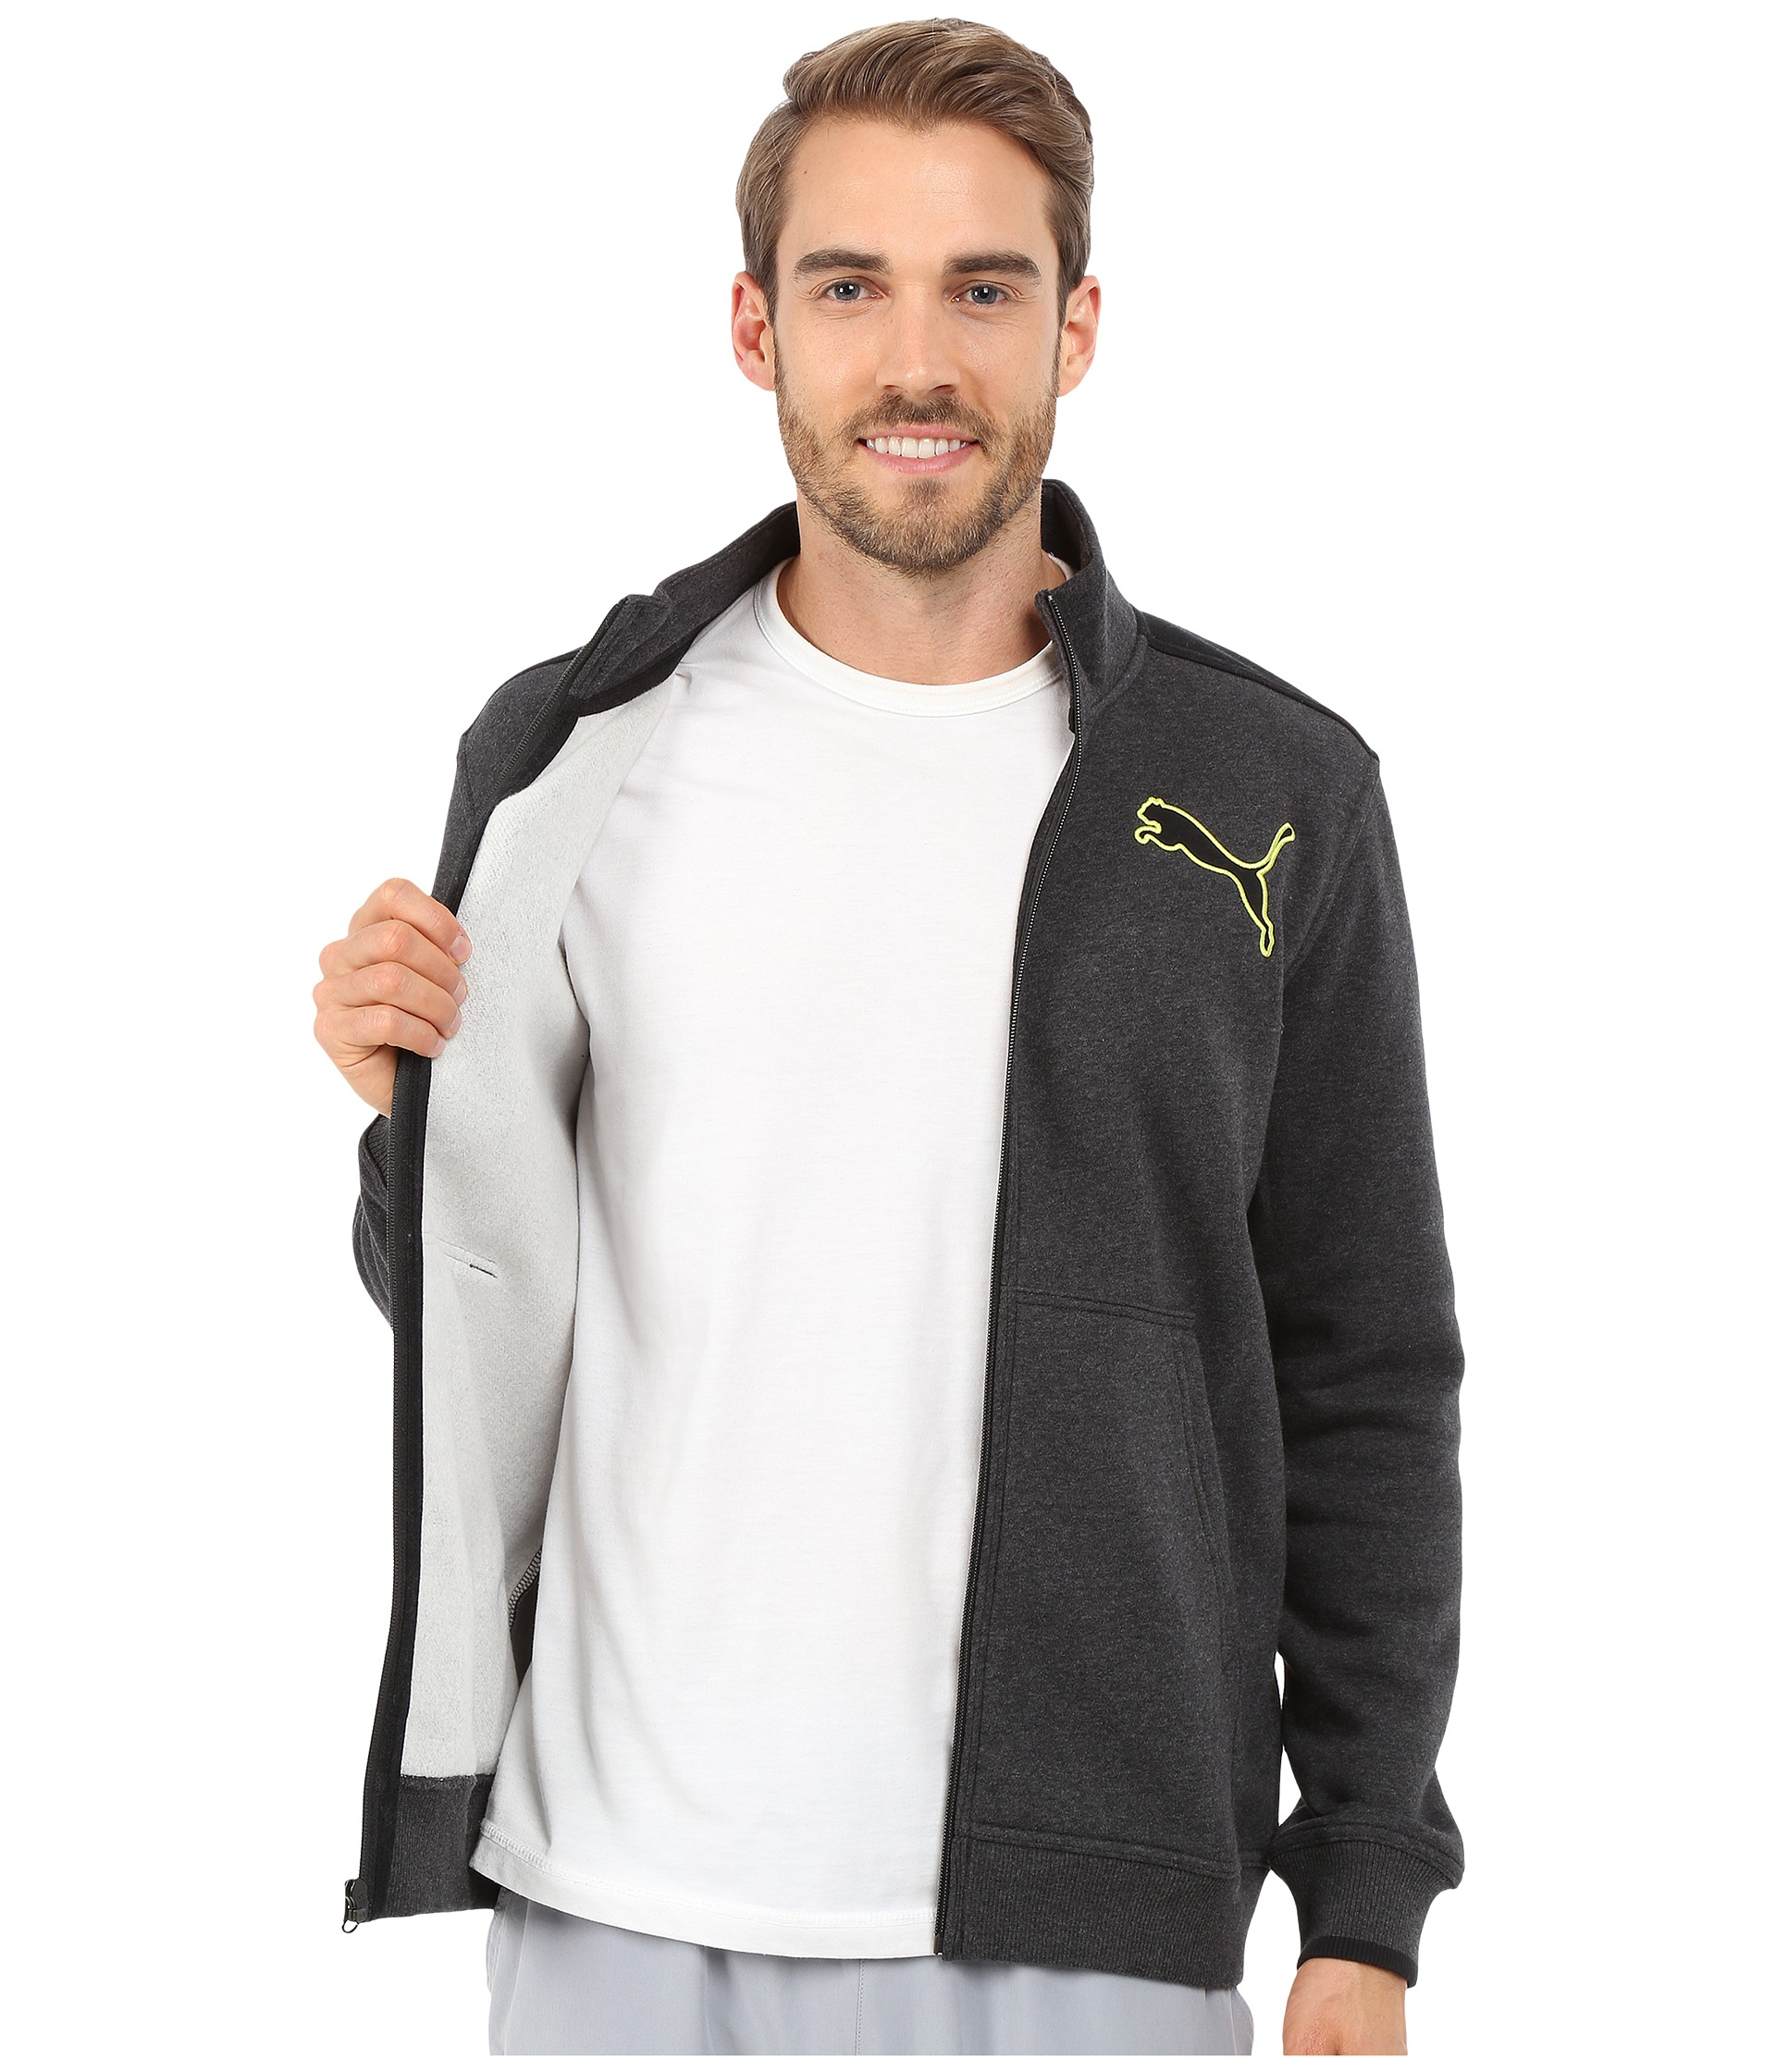 Lyst - Puma Fleece Track Jacket in Gray for Men